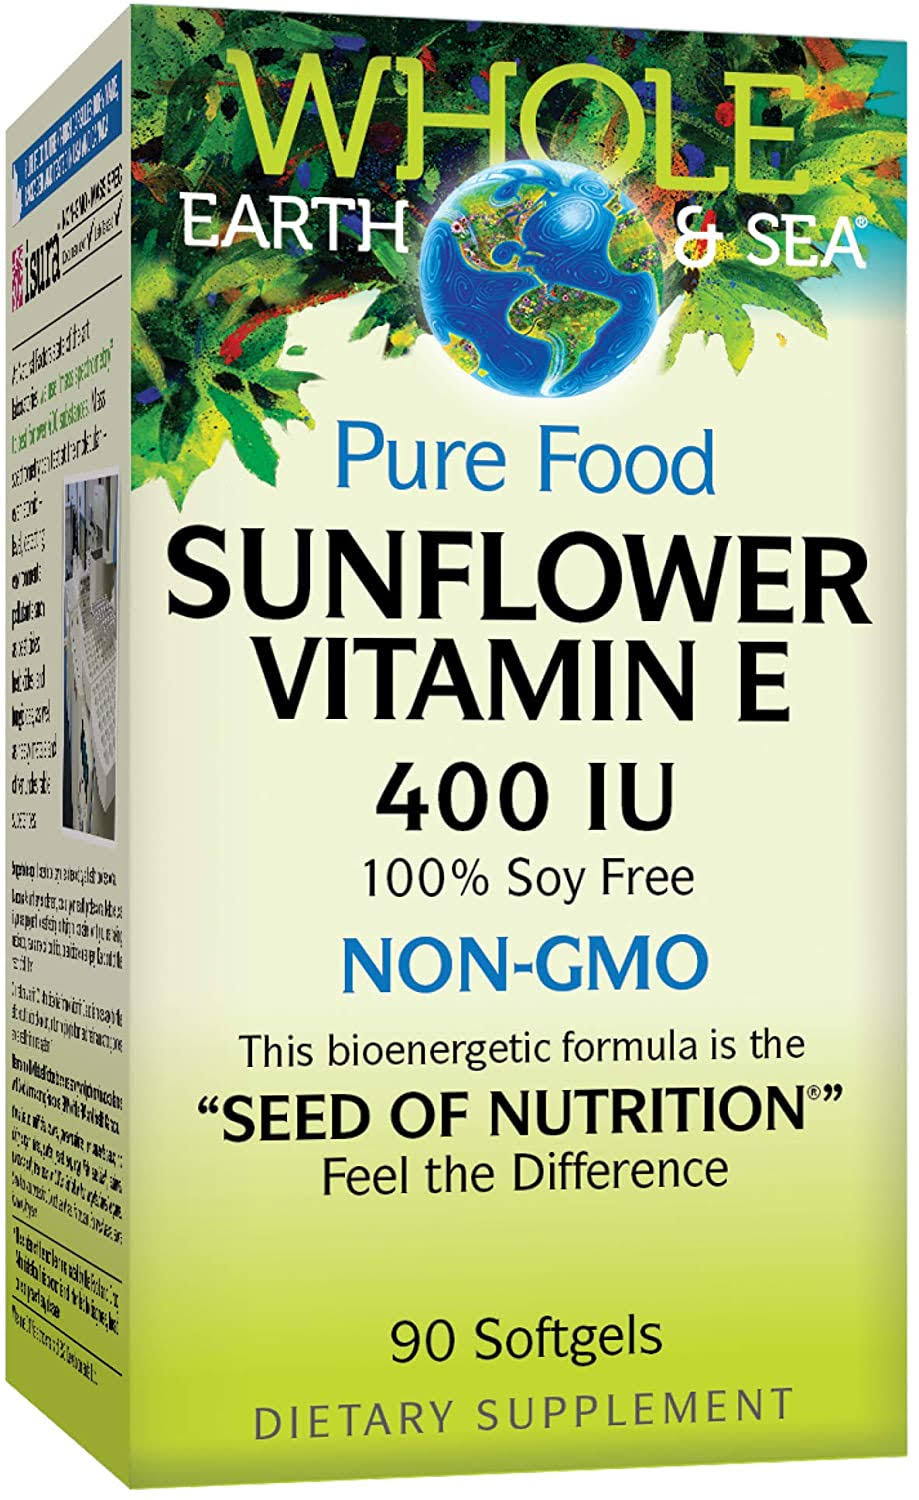 Whole Earth & Sea Sunflower Vitamin E 400 IU Dietary Supplement - 90 Softgels